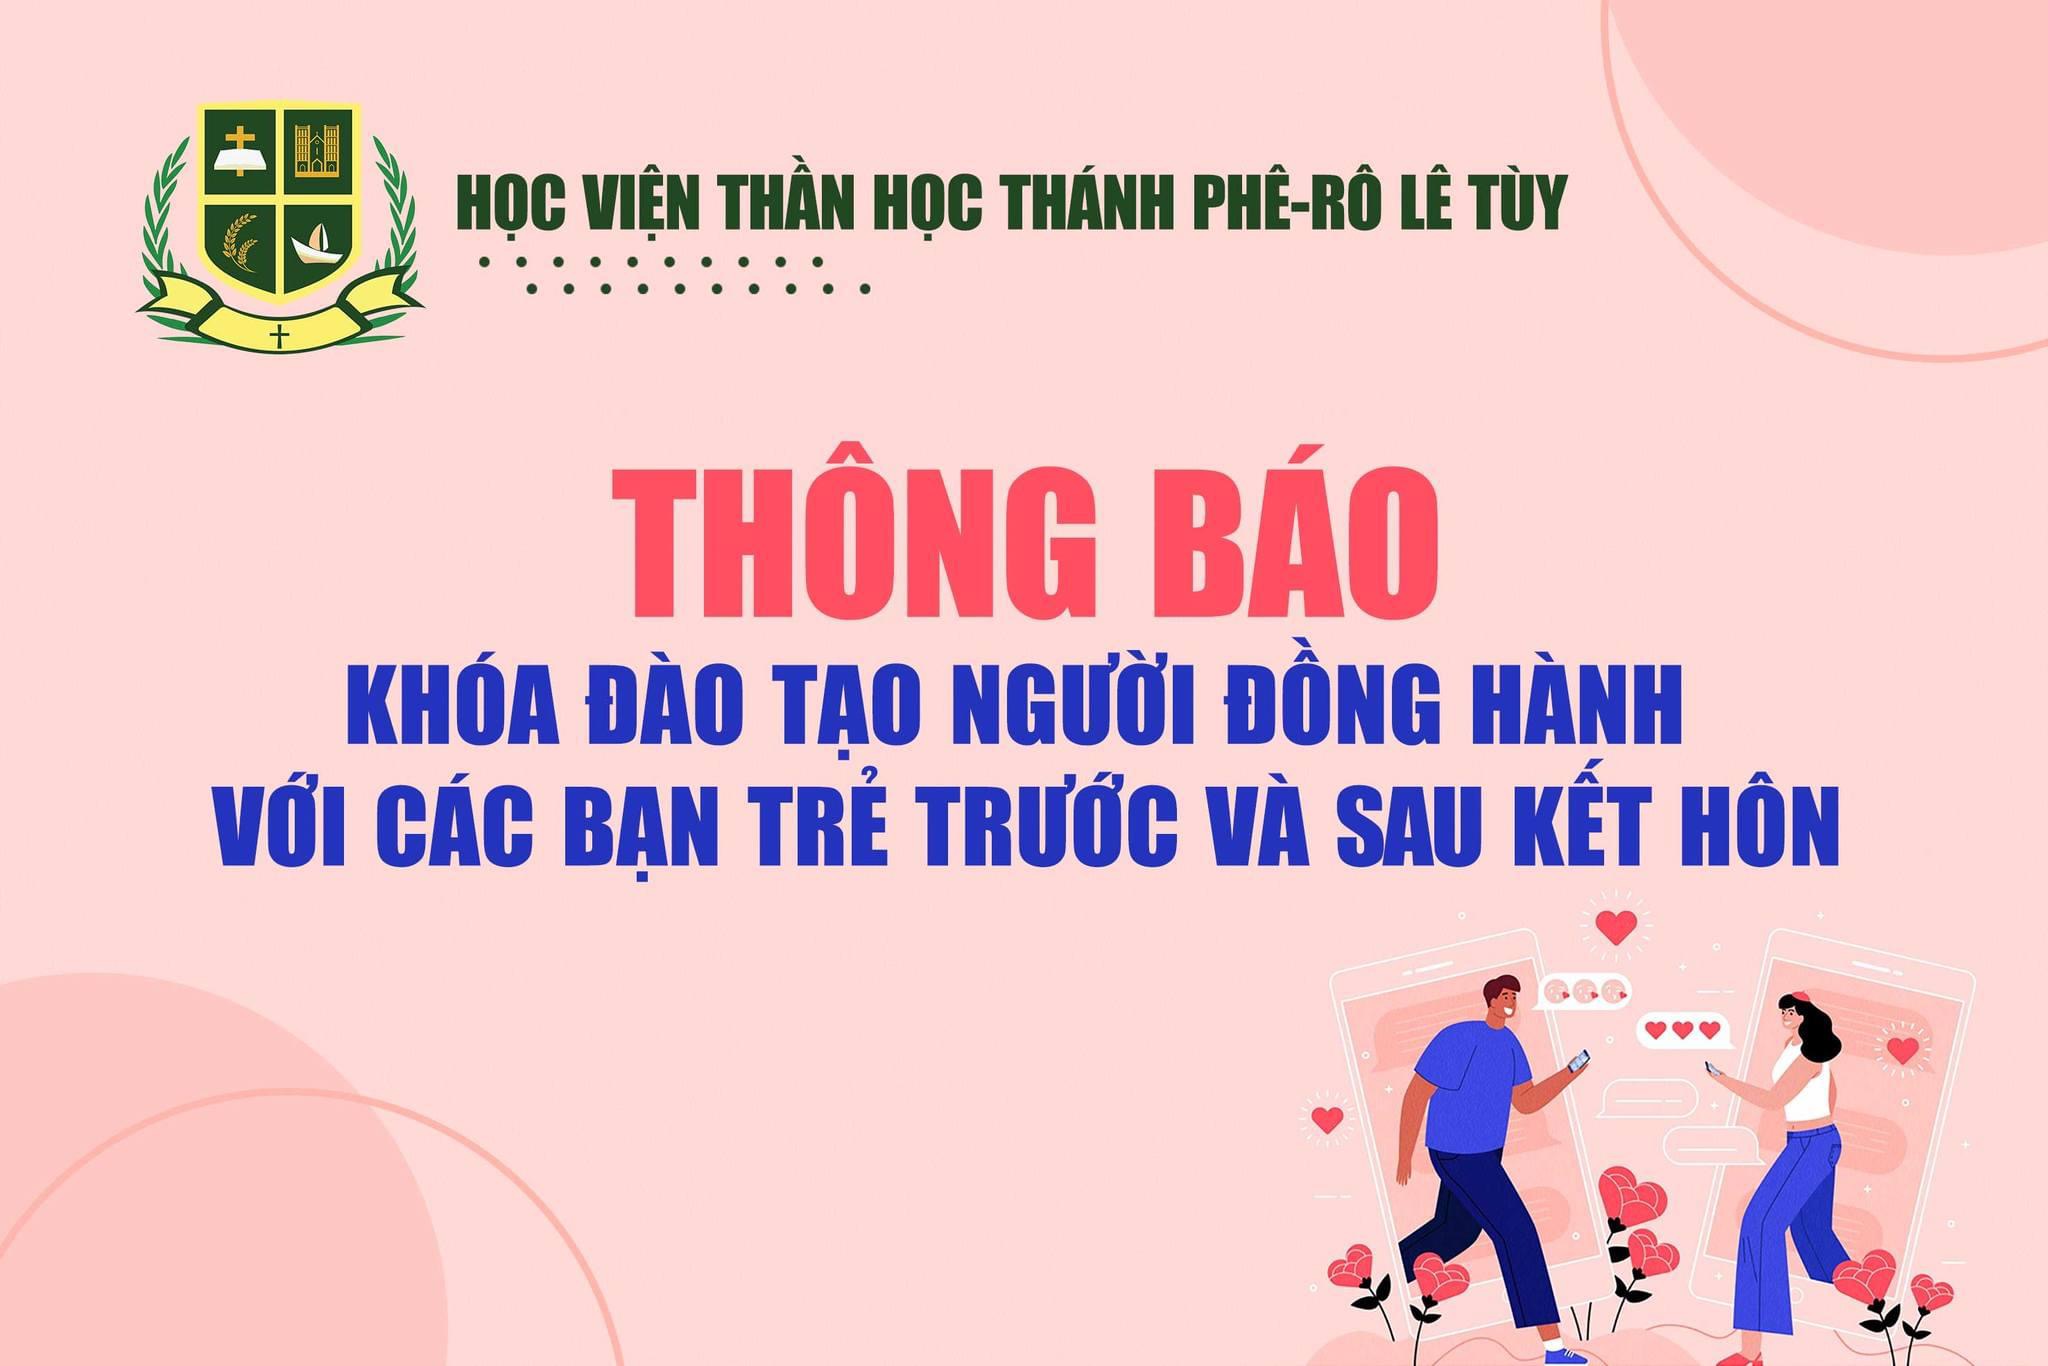 Xem chi tiết tại: https://www.tonggiaophanhanoi.org/thong-bao-khoa-dao-tao-nguoi-dong-hanh-voi-cac-ban-tre-truoc-va-sau-ket-hon/